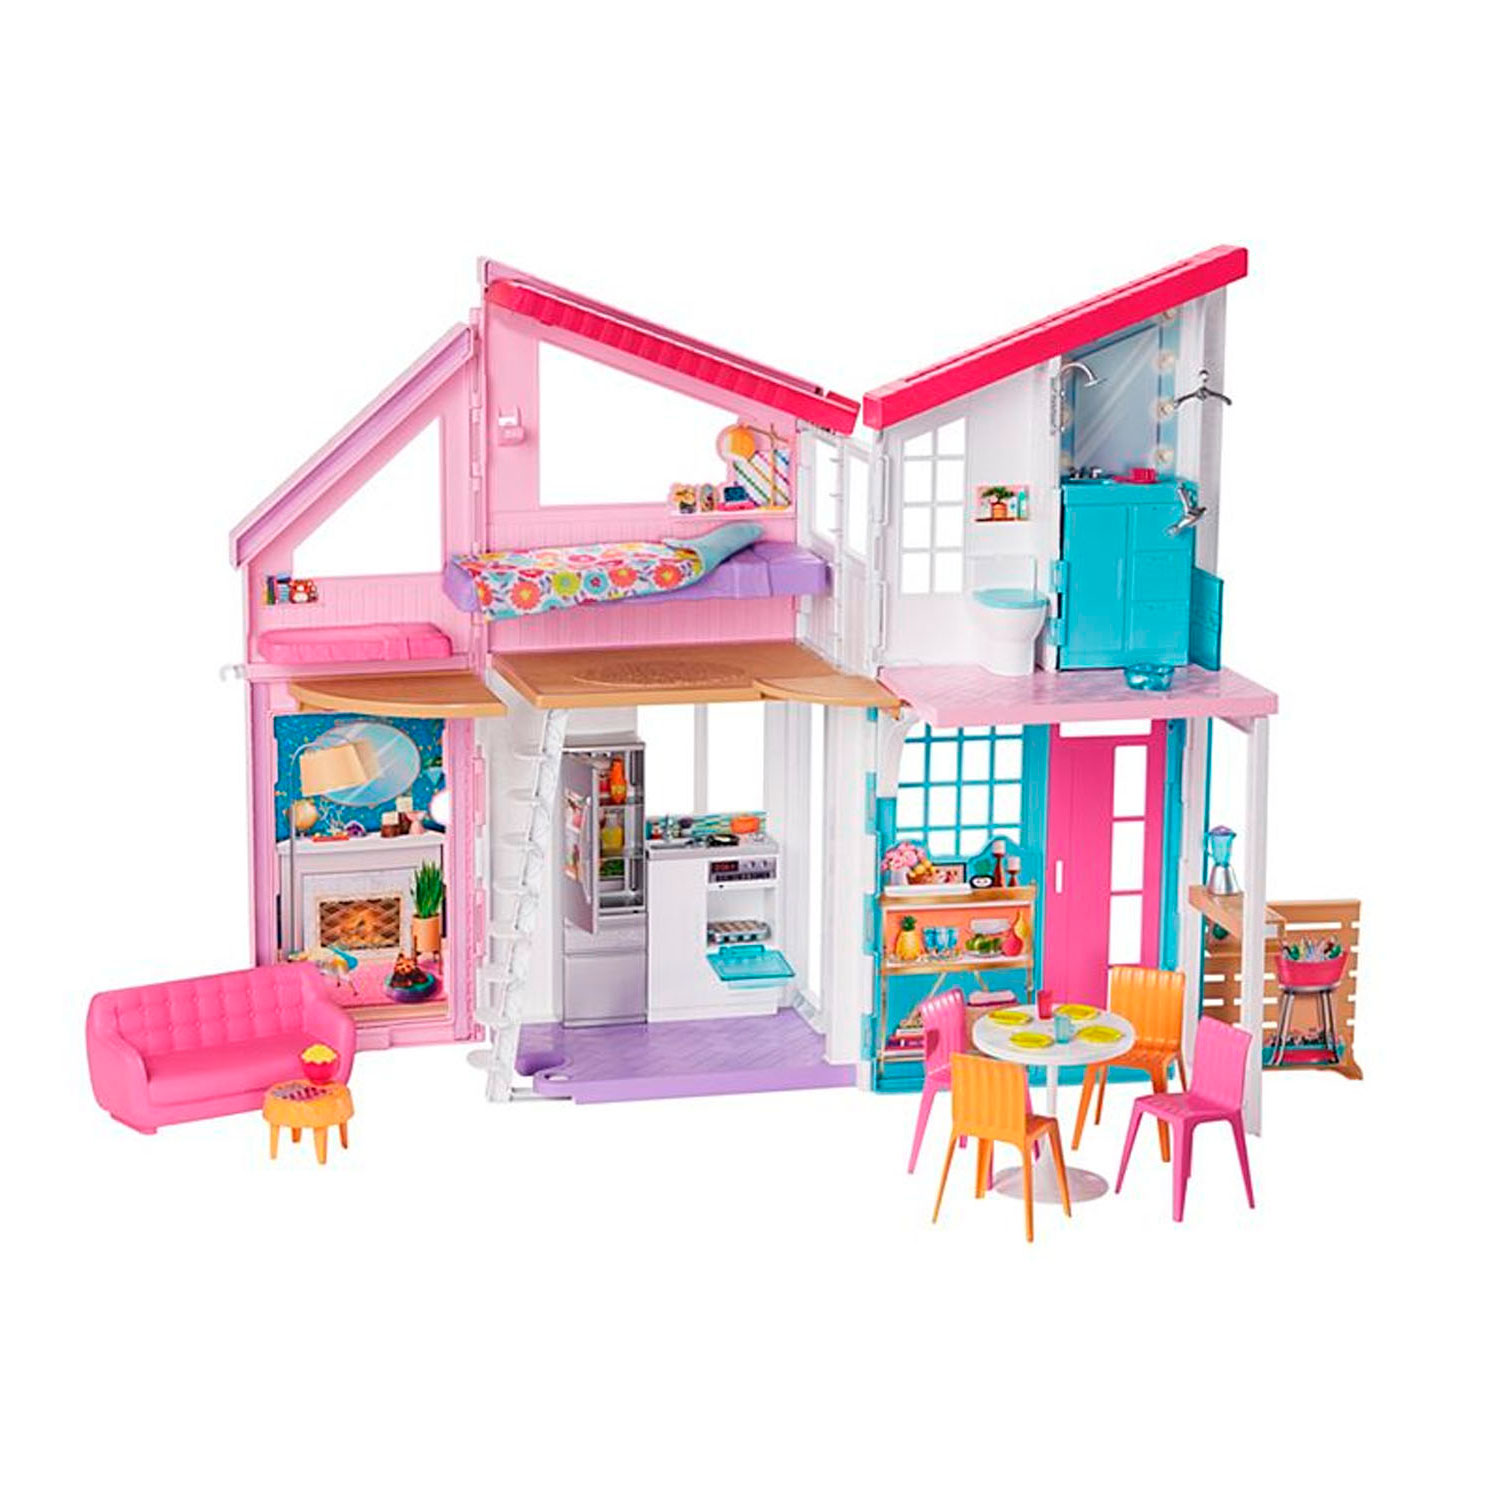 Shipley Mantel hardop Barbie Malibu house | Thimble Toys